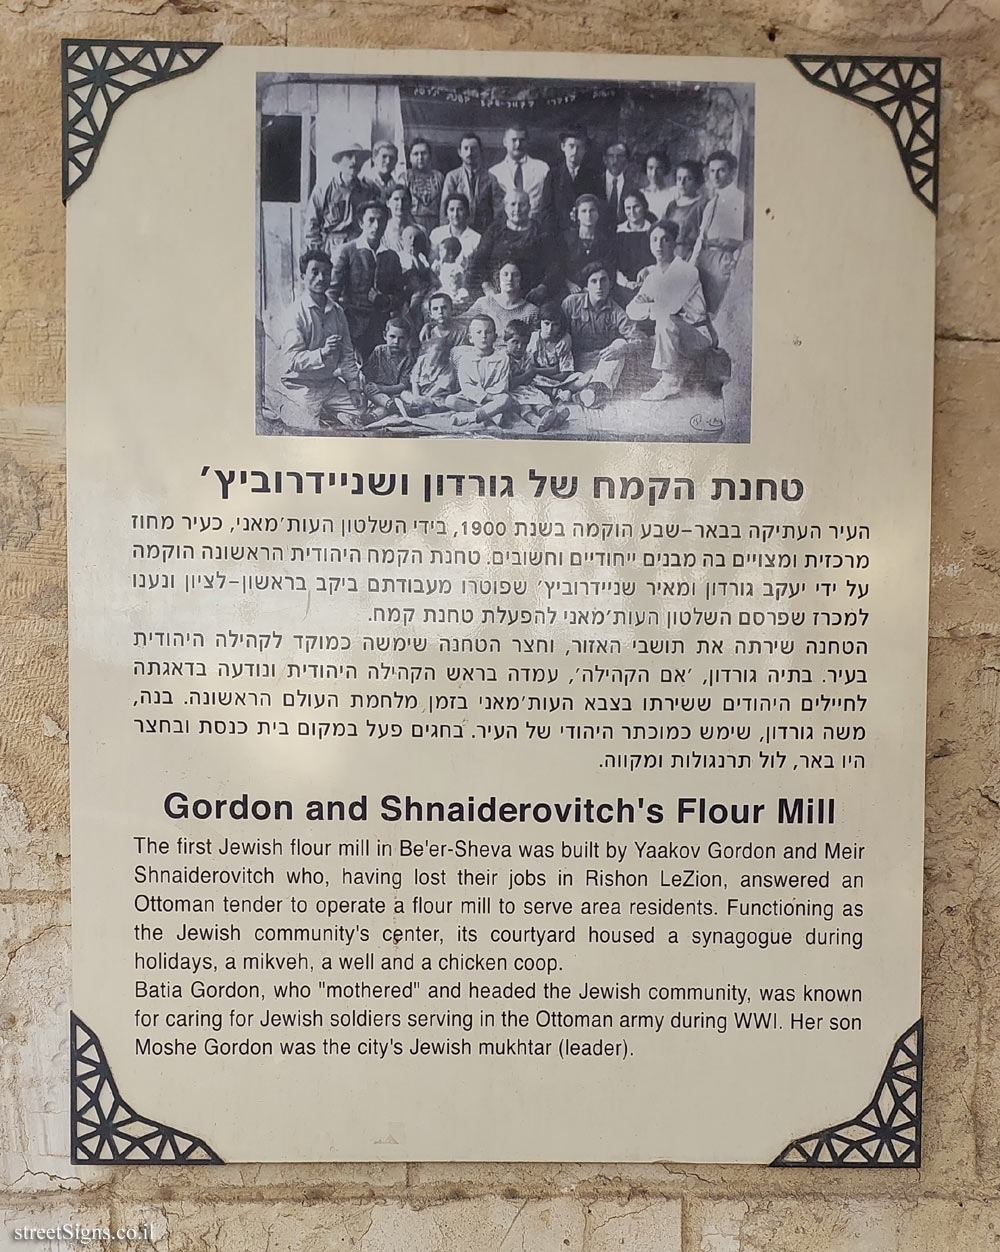 Be’er Sheva - Gordon and Shnaiderovitch’s Flour Mill